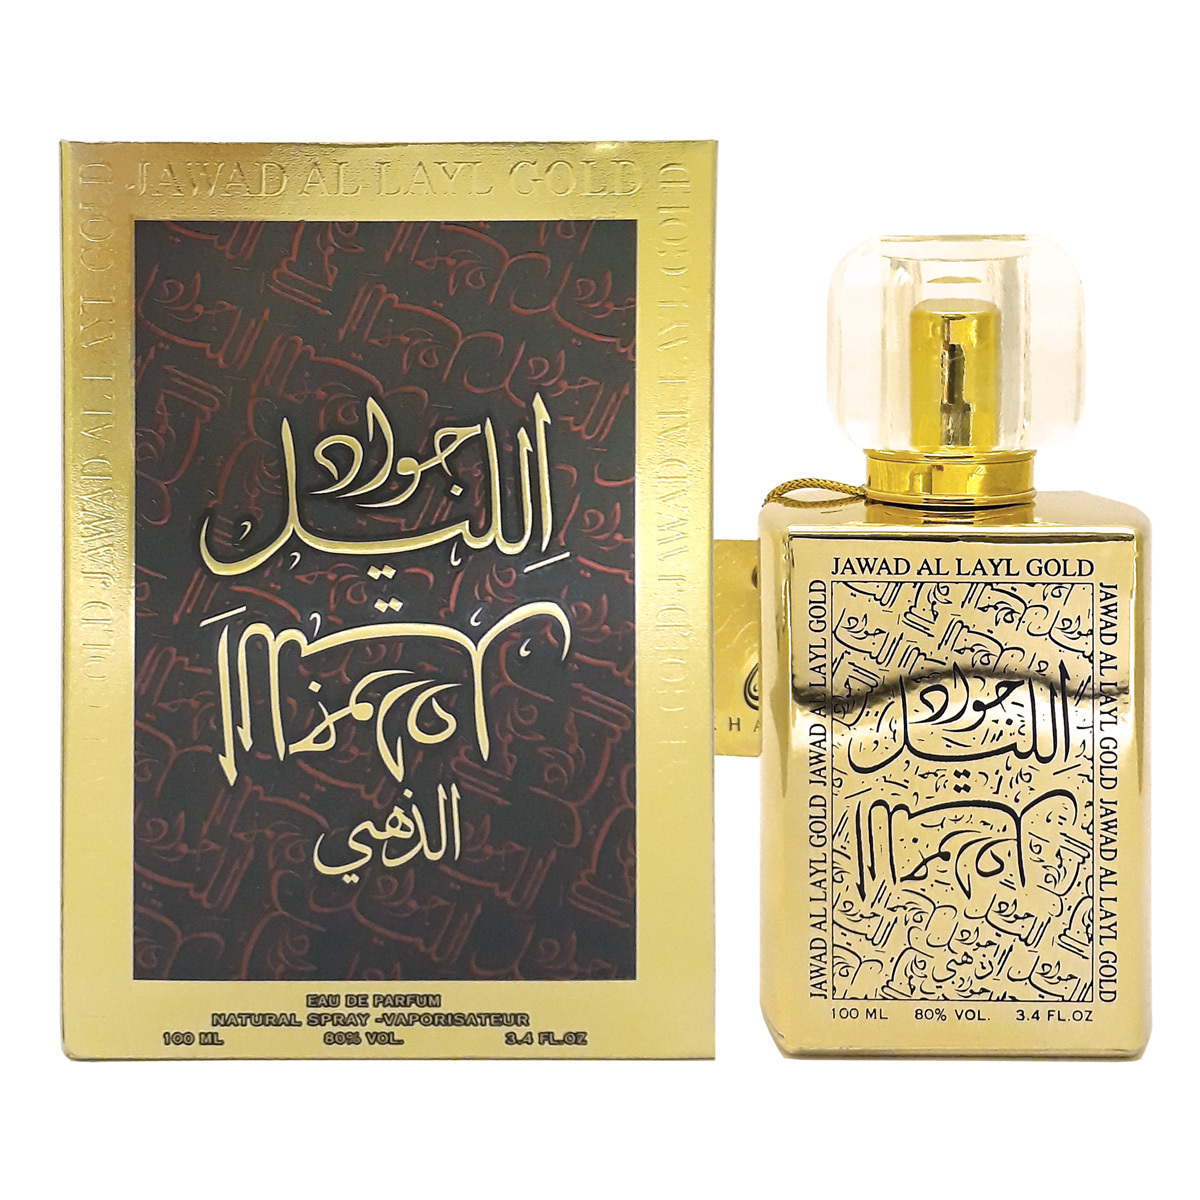 Пробник для Jawad al Layl Gold  Джавад аль Лайл Золото 1 мл спрей от Халис Khalis Perfumes